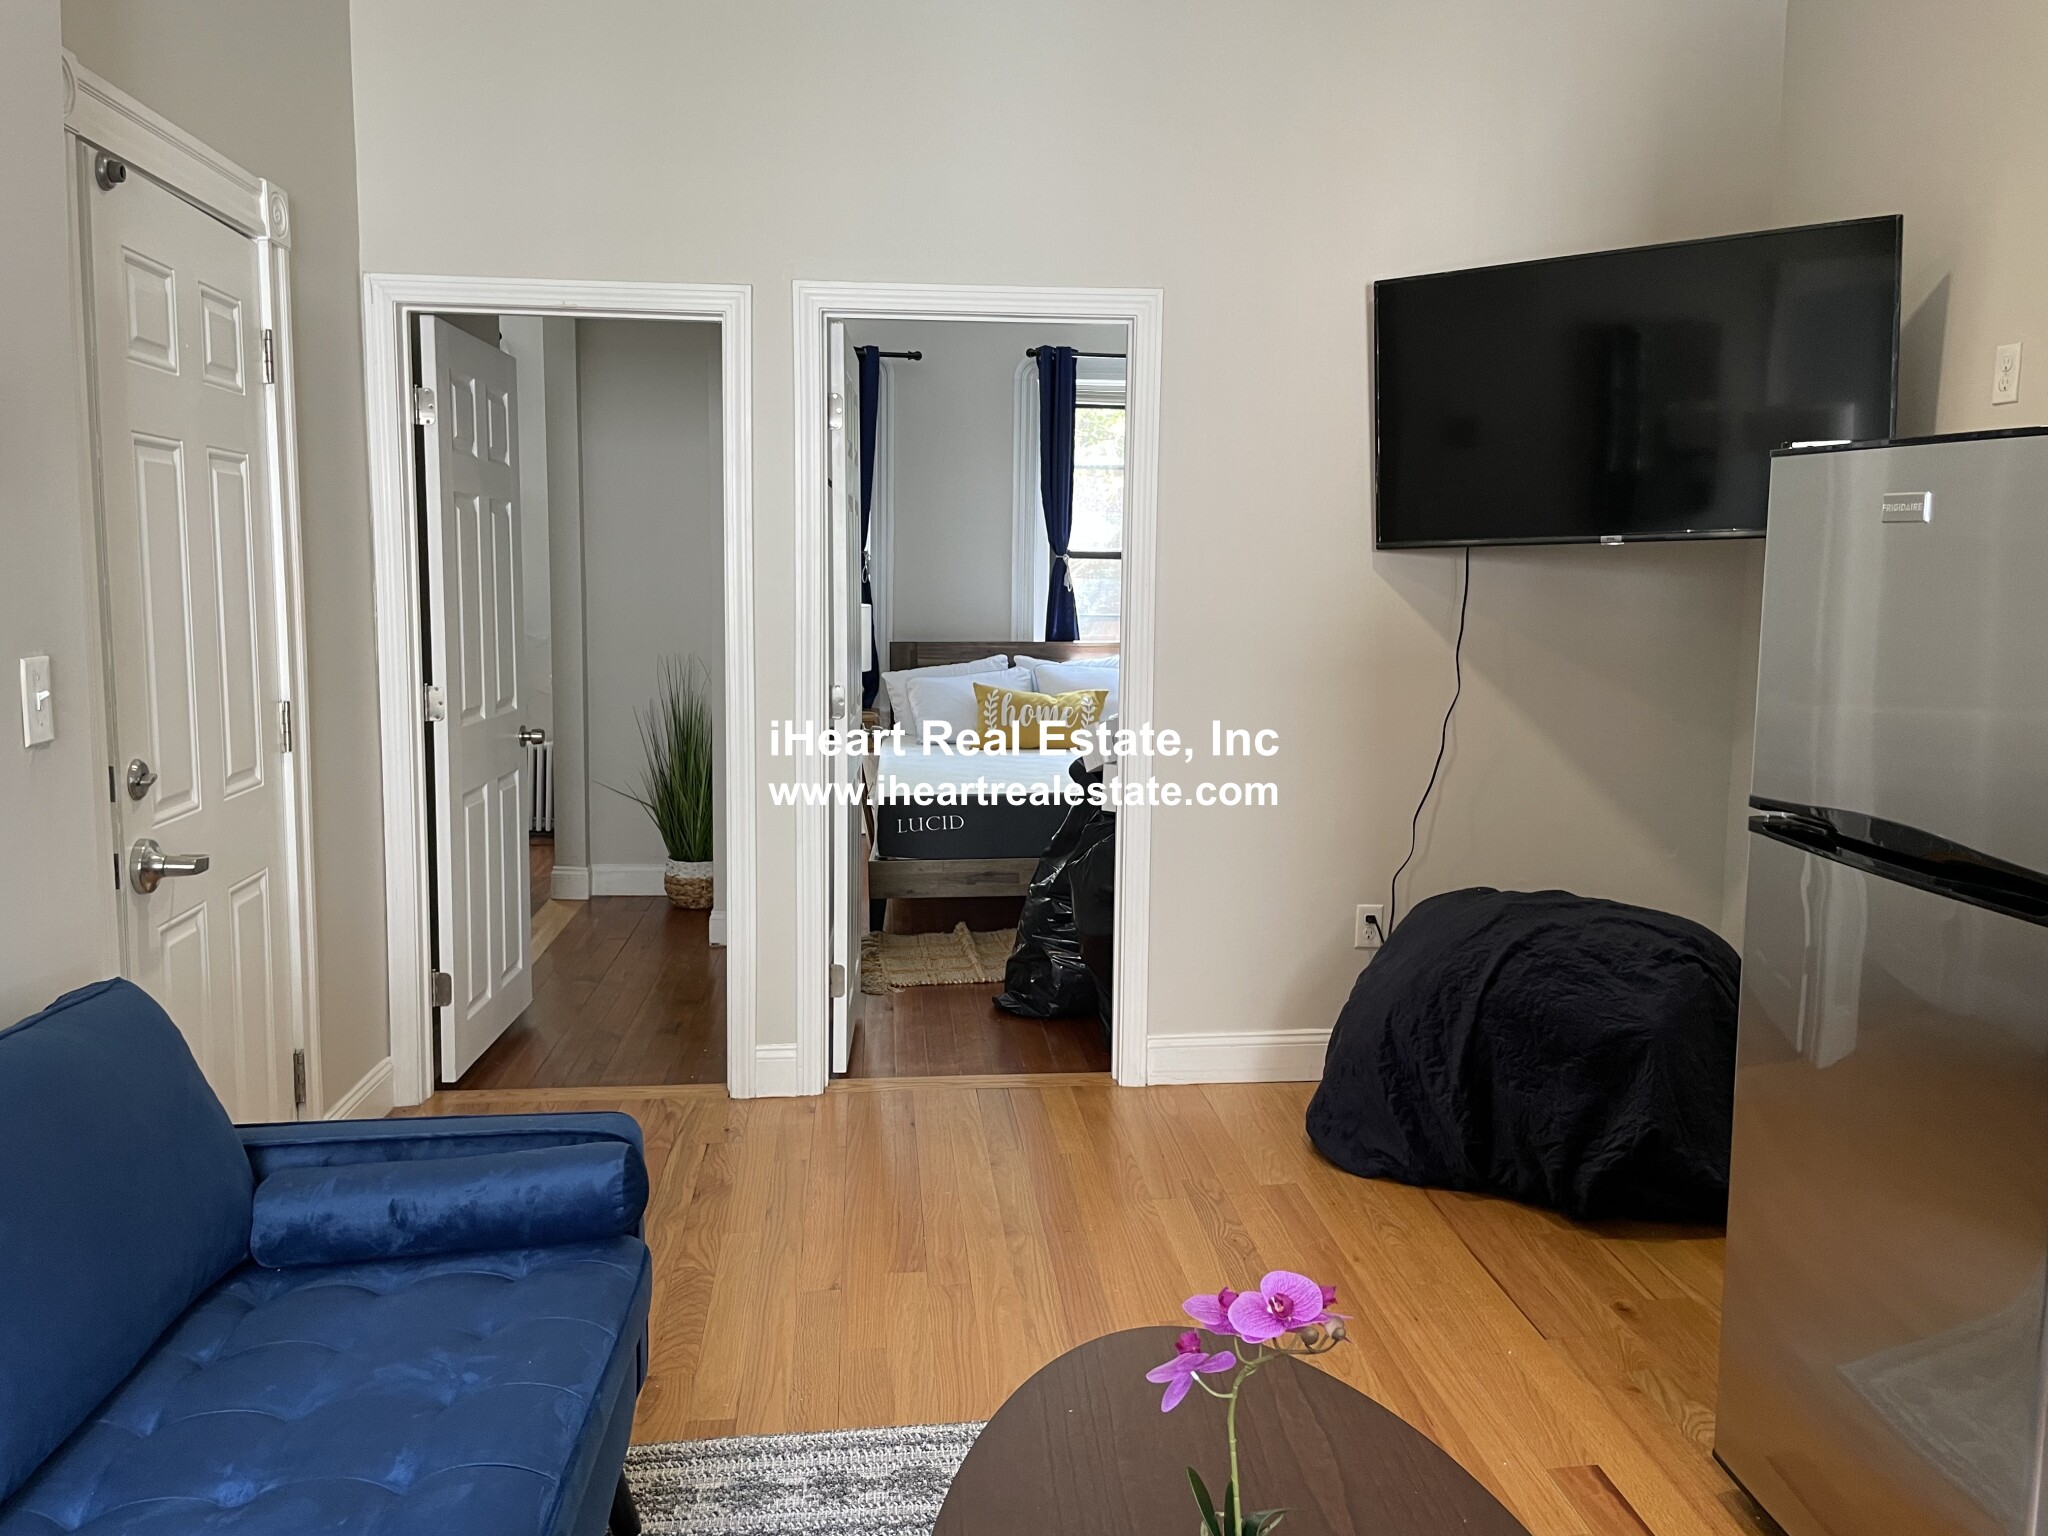 Photos of apartment on Phillips,Boston MA 02114